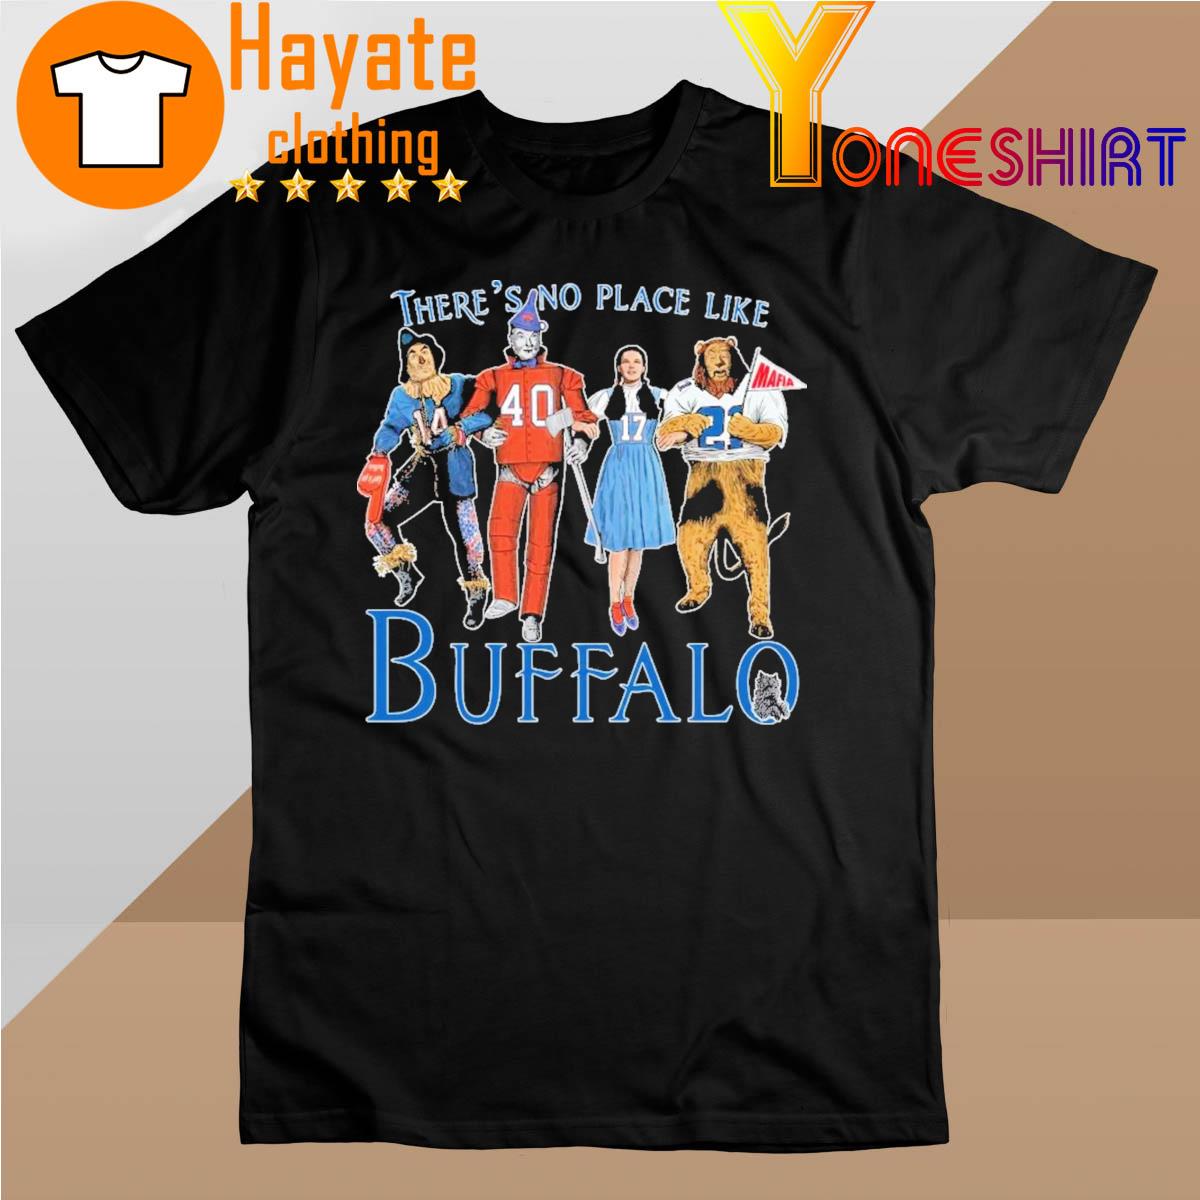 There's No Place Like Buffalo shirt